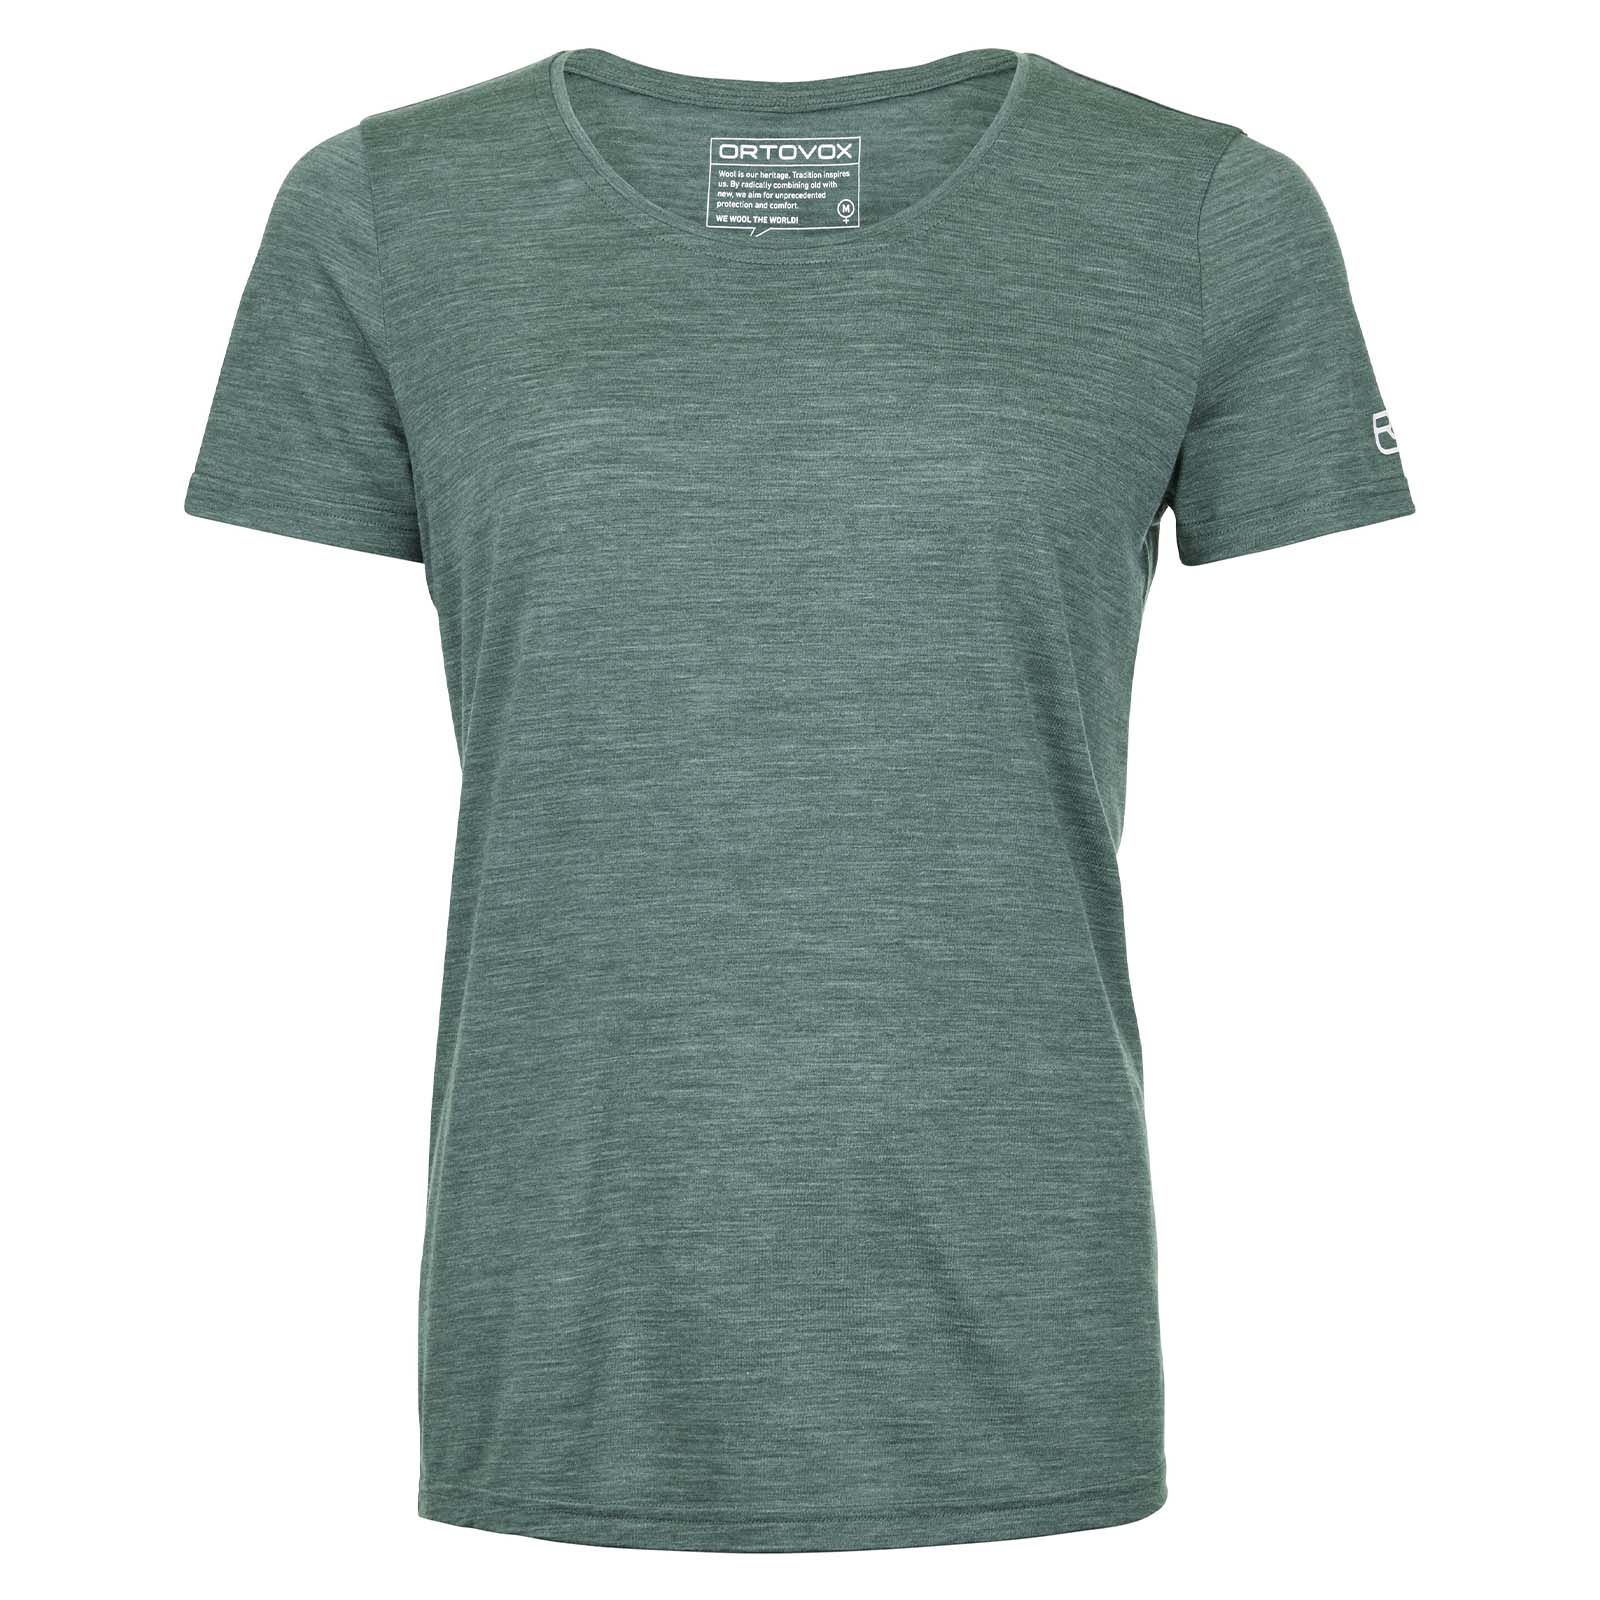 Ortovox 120 Cool Tec Clean Damen T-Shirt grün